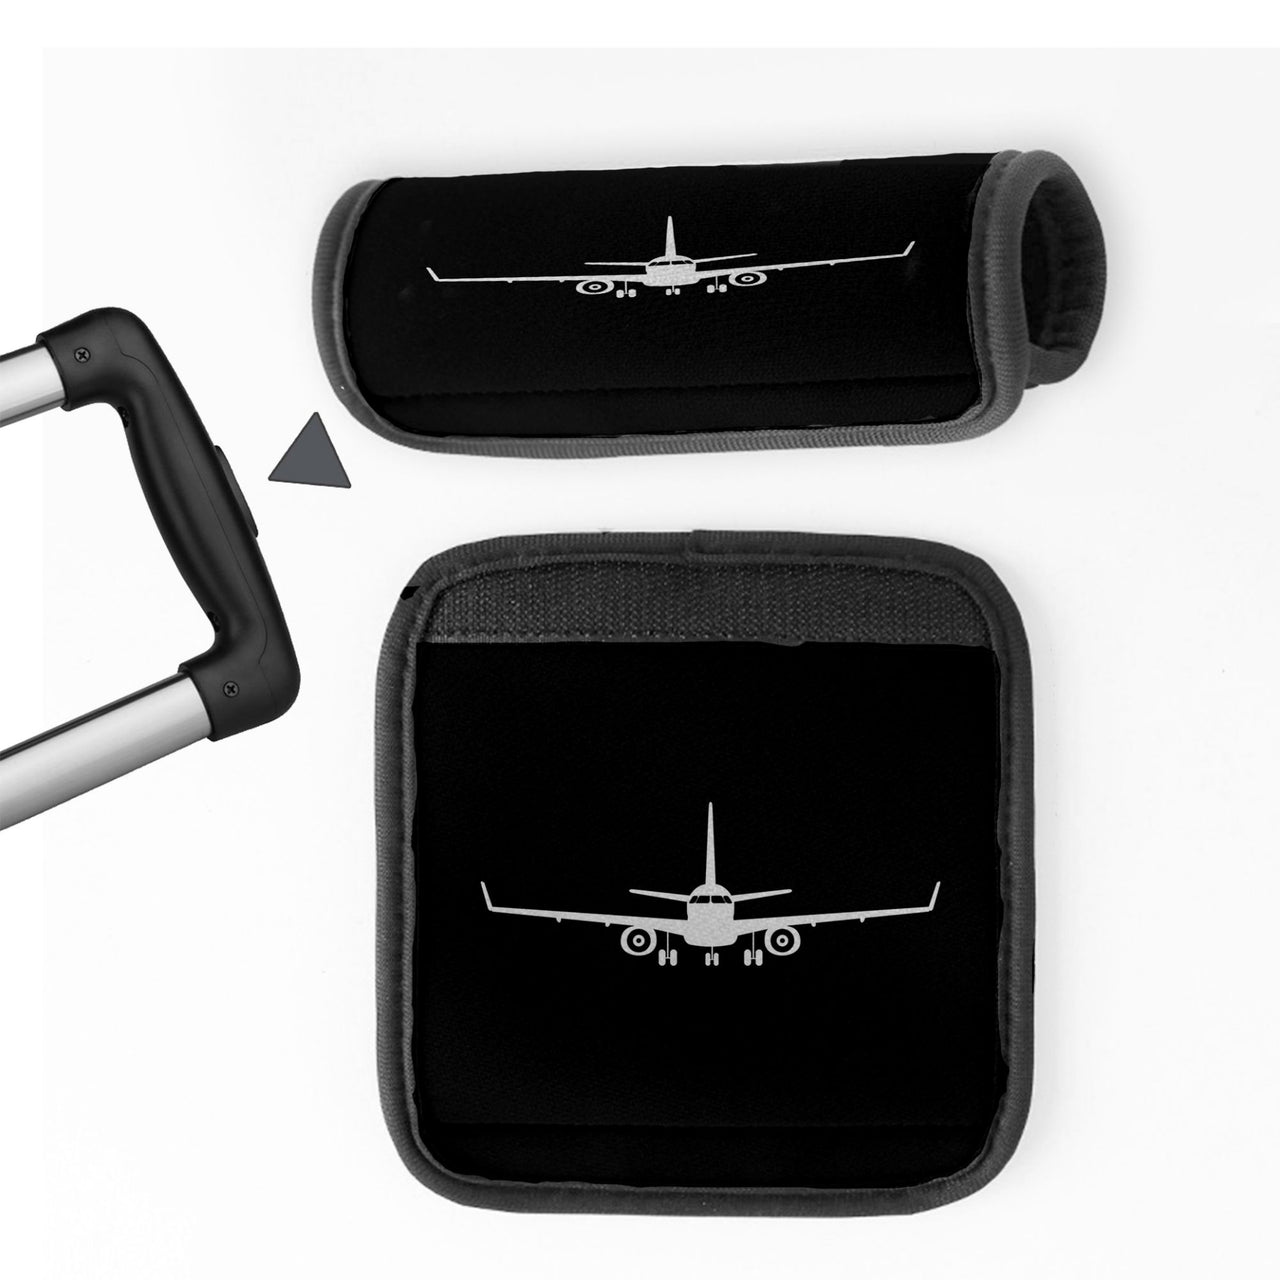 Embraer E-190 Silhouette Plane Designed Neoprene Luggage Handle Covers